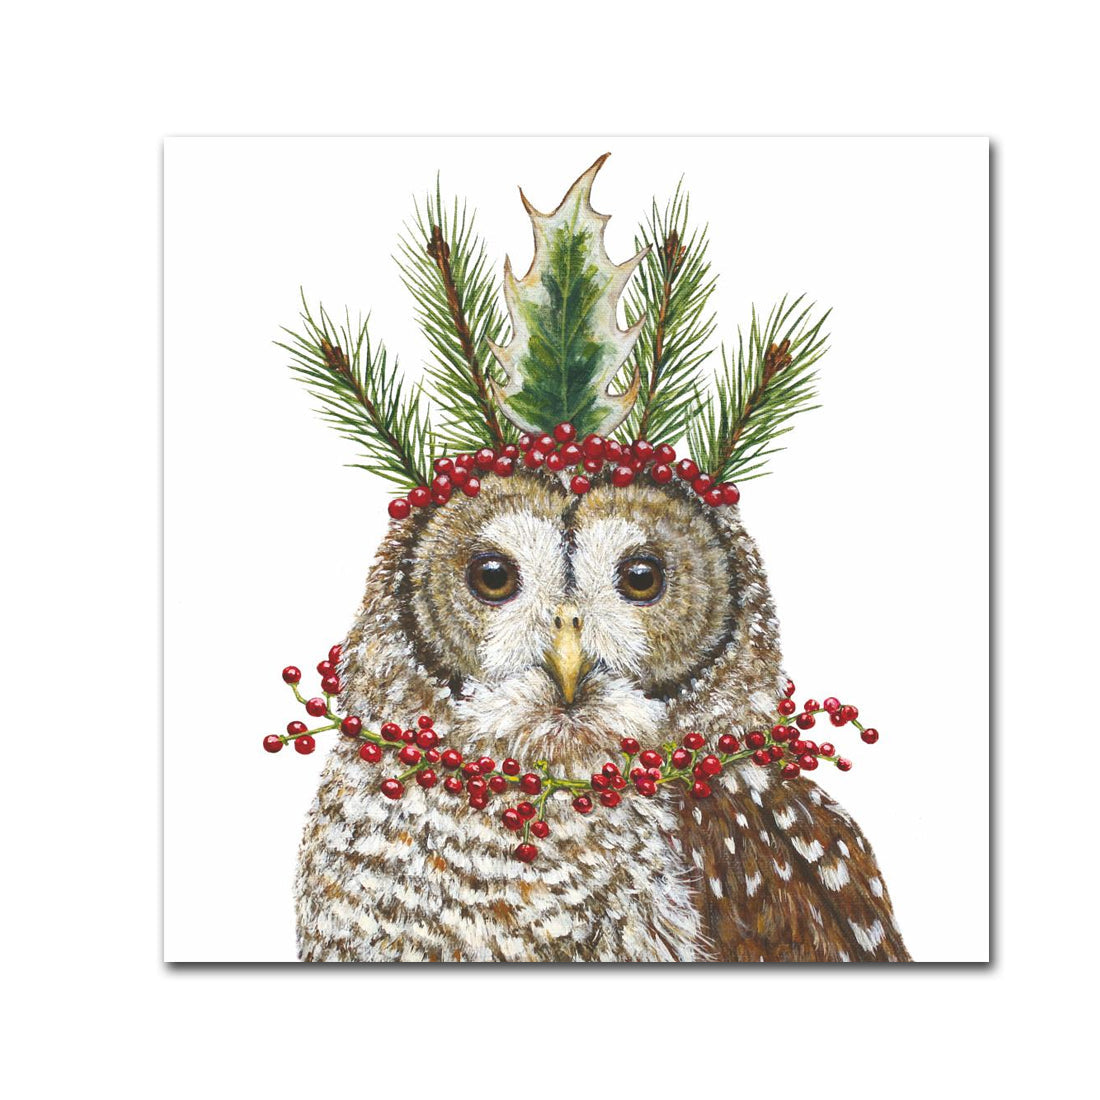 Candace The Christmas Owl Beverage Napkins by Vicki Sawyer